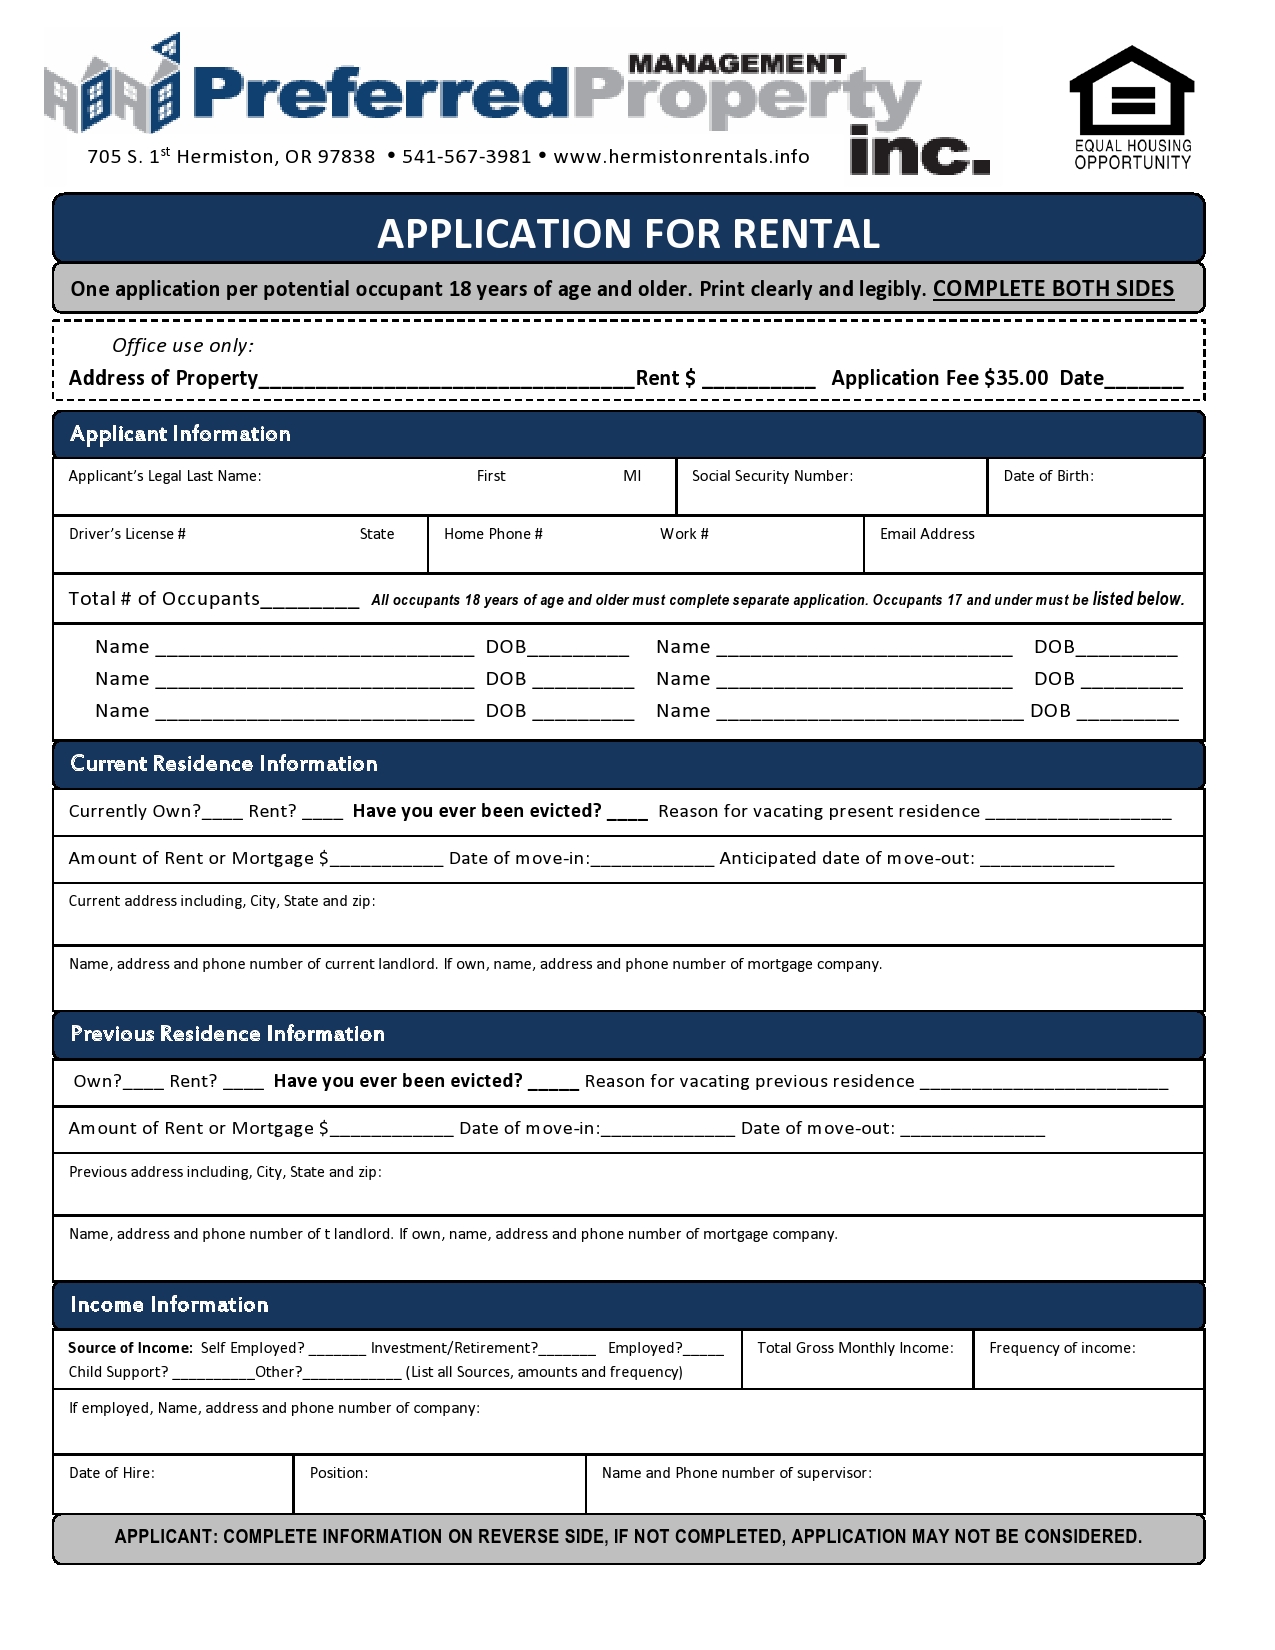 Free rental application form 19